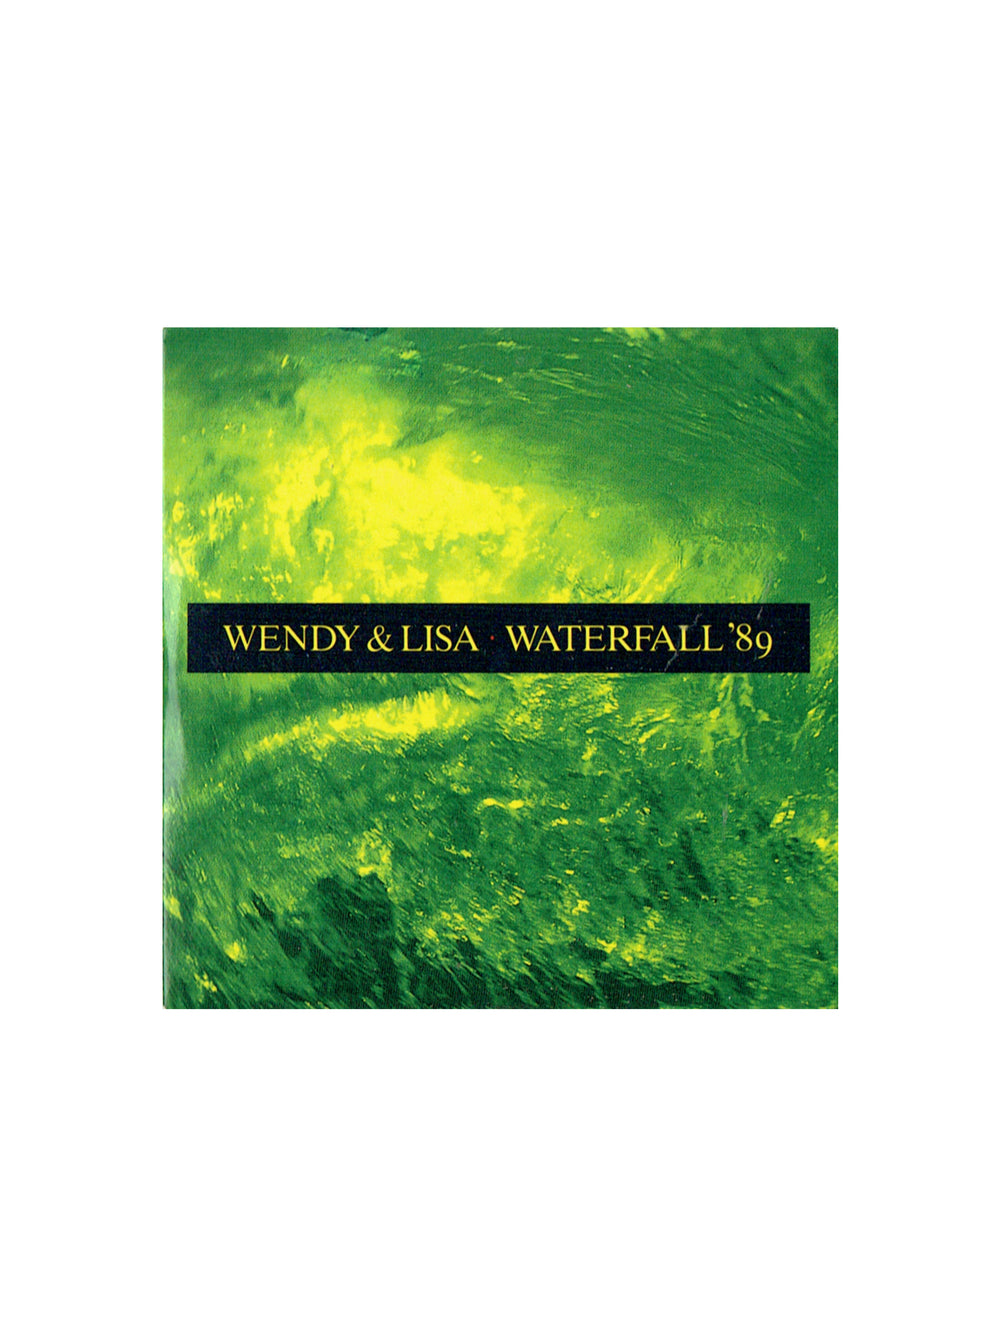 Prince – Wendy & Lisa Waterfall '89 CD Single Clam 3" Preloved: 1989